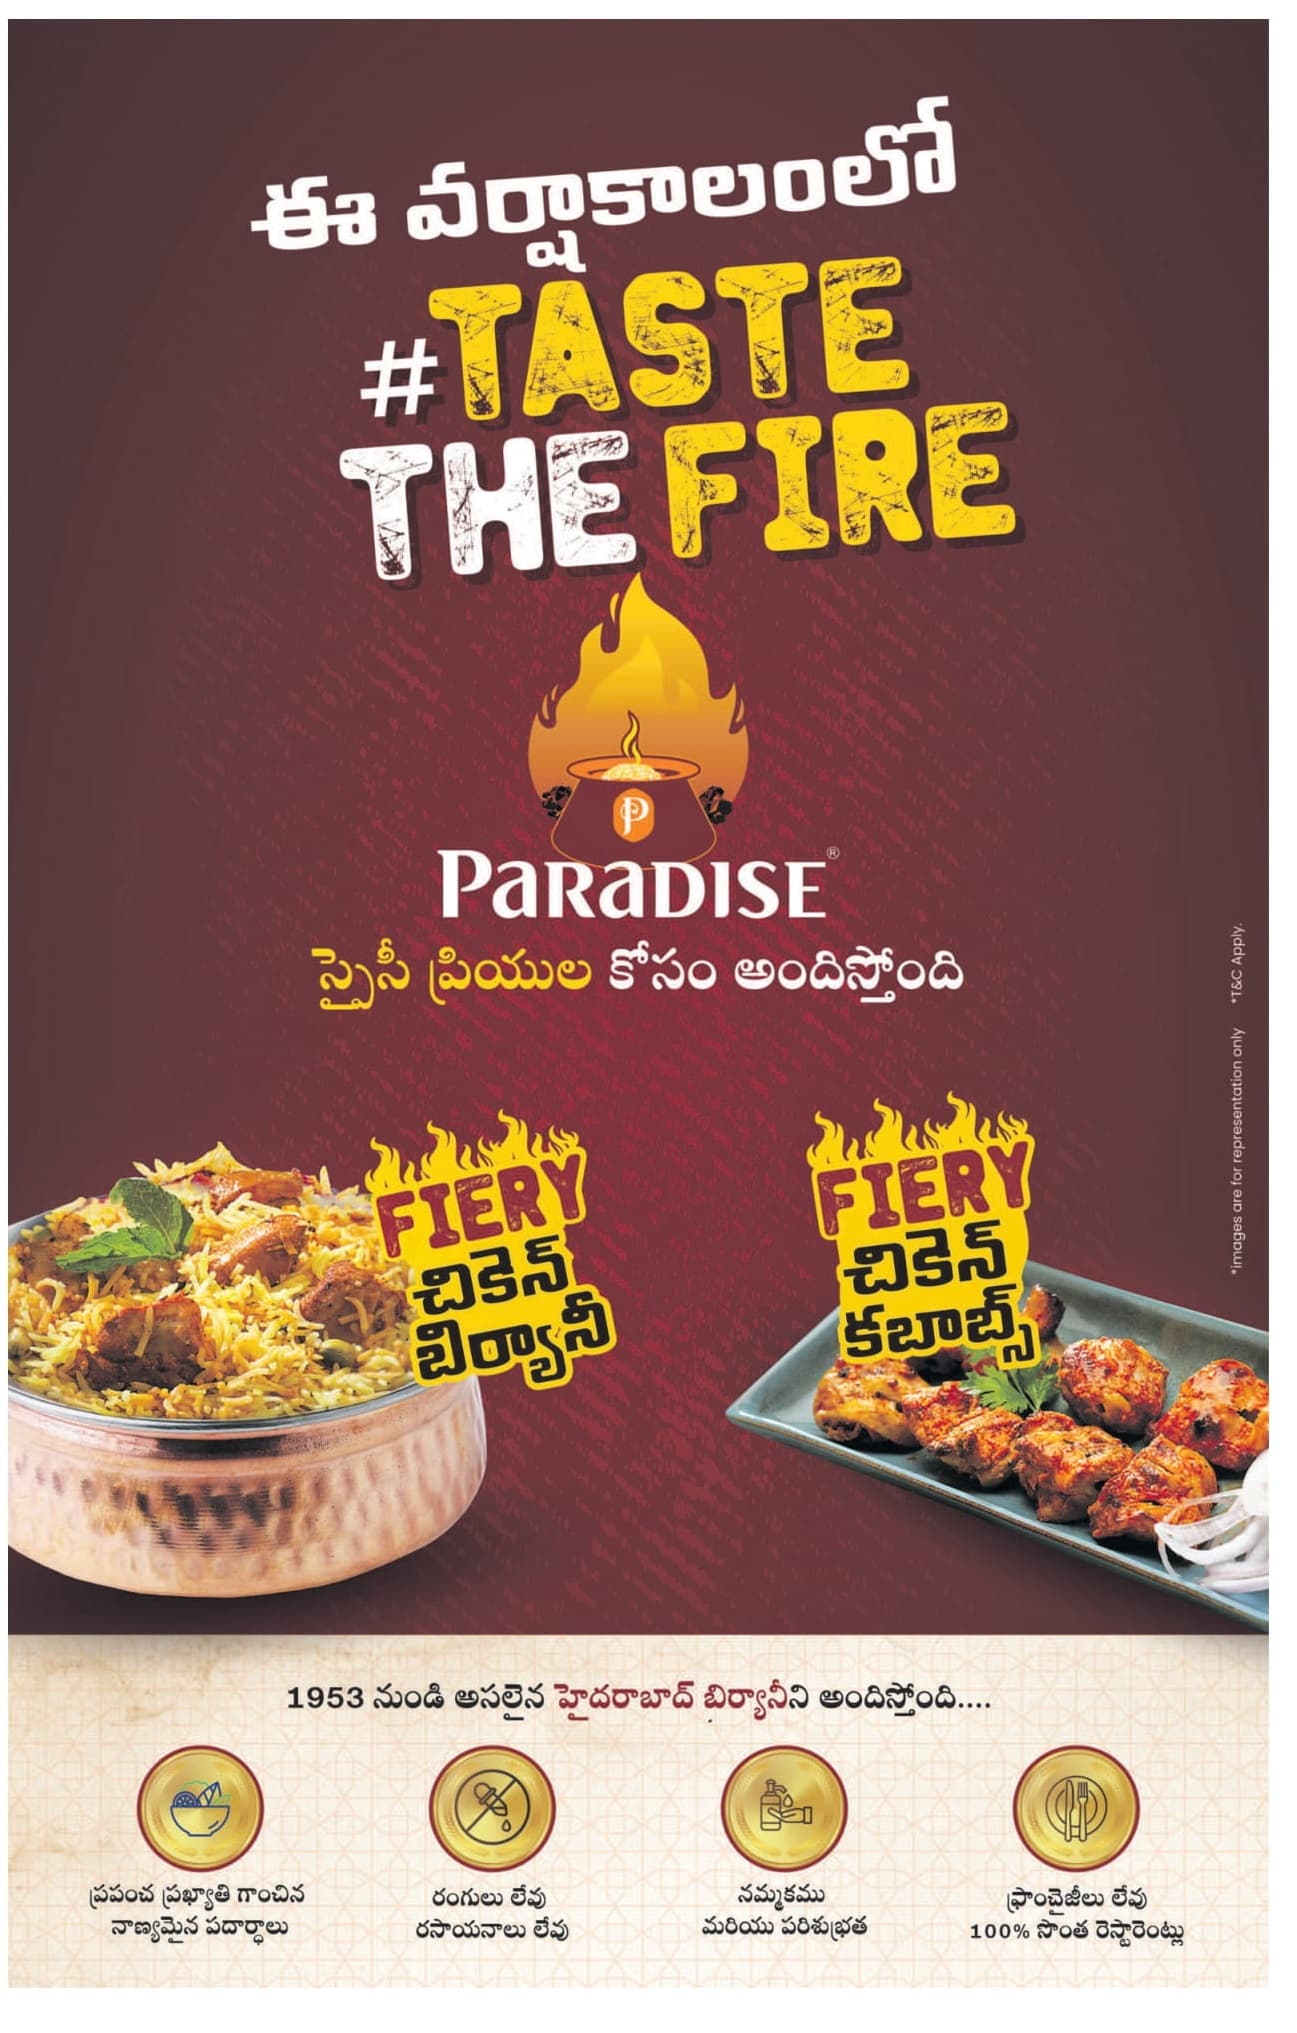 Paradise Food Court | Taste The Fire